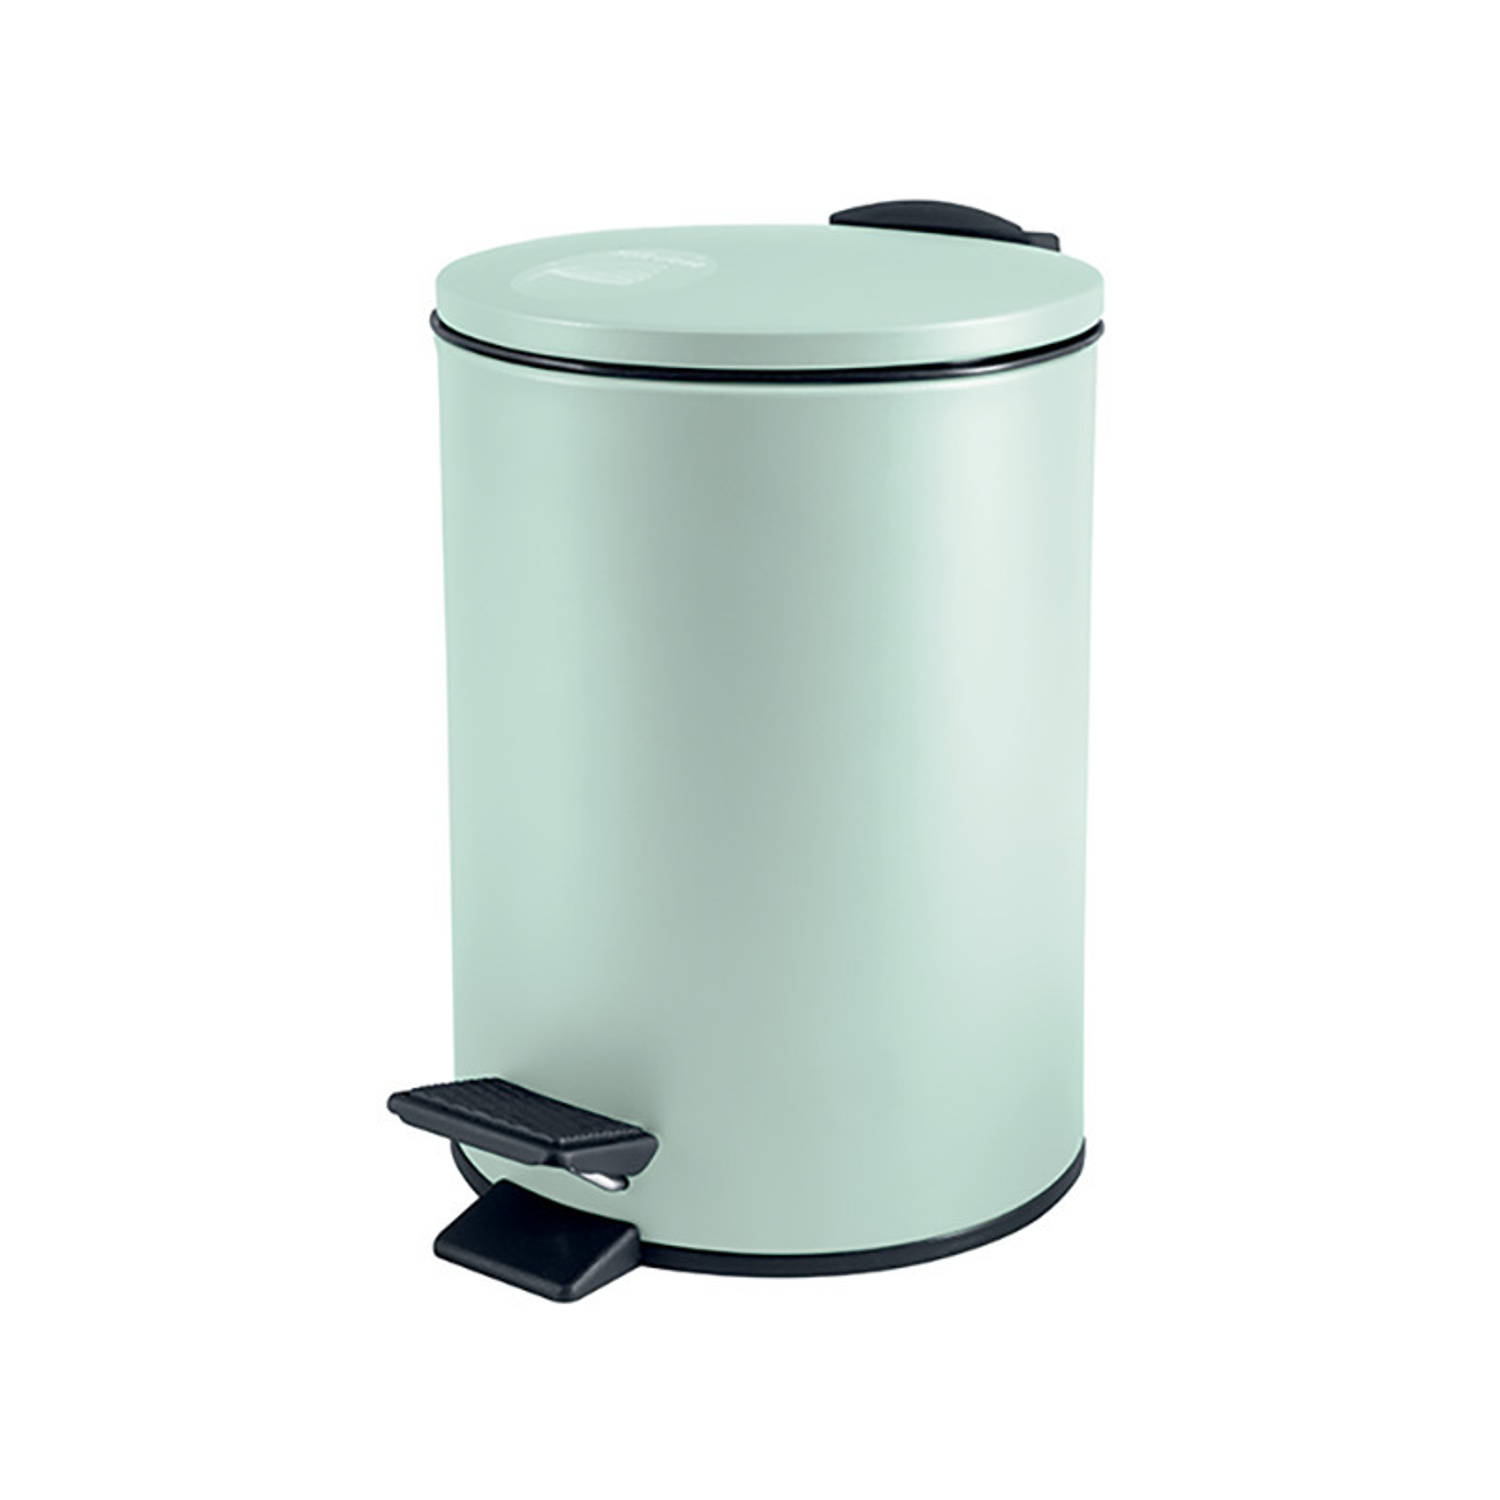 Spirella Pedaalemmer Cannes mintgroen 3 liter metaal L17 x H25 cm soft-close toilet-badkamer Pedaale